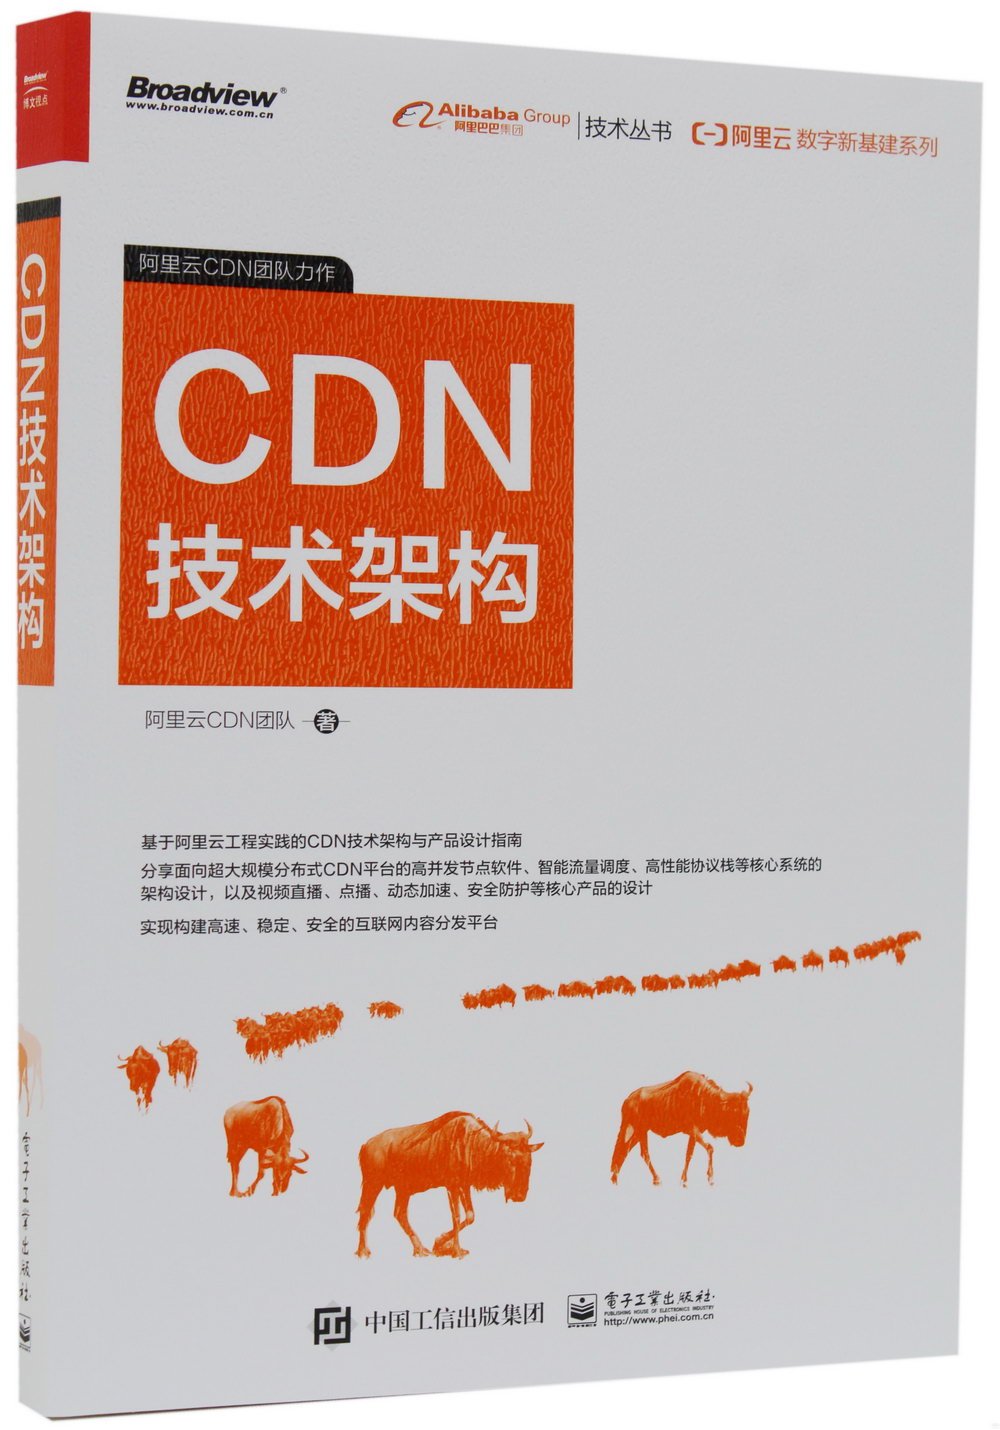 CDN技術架構